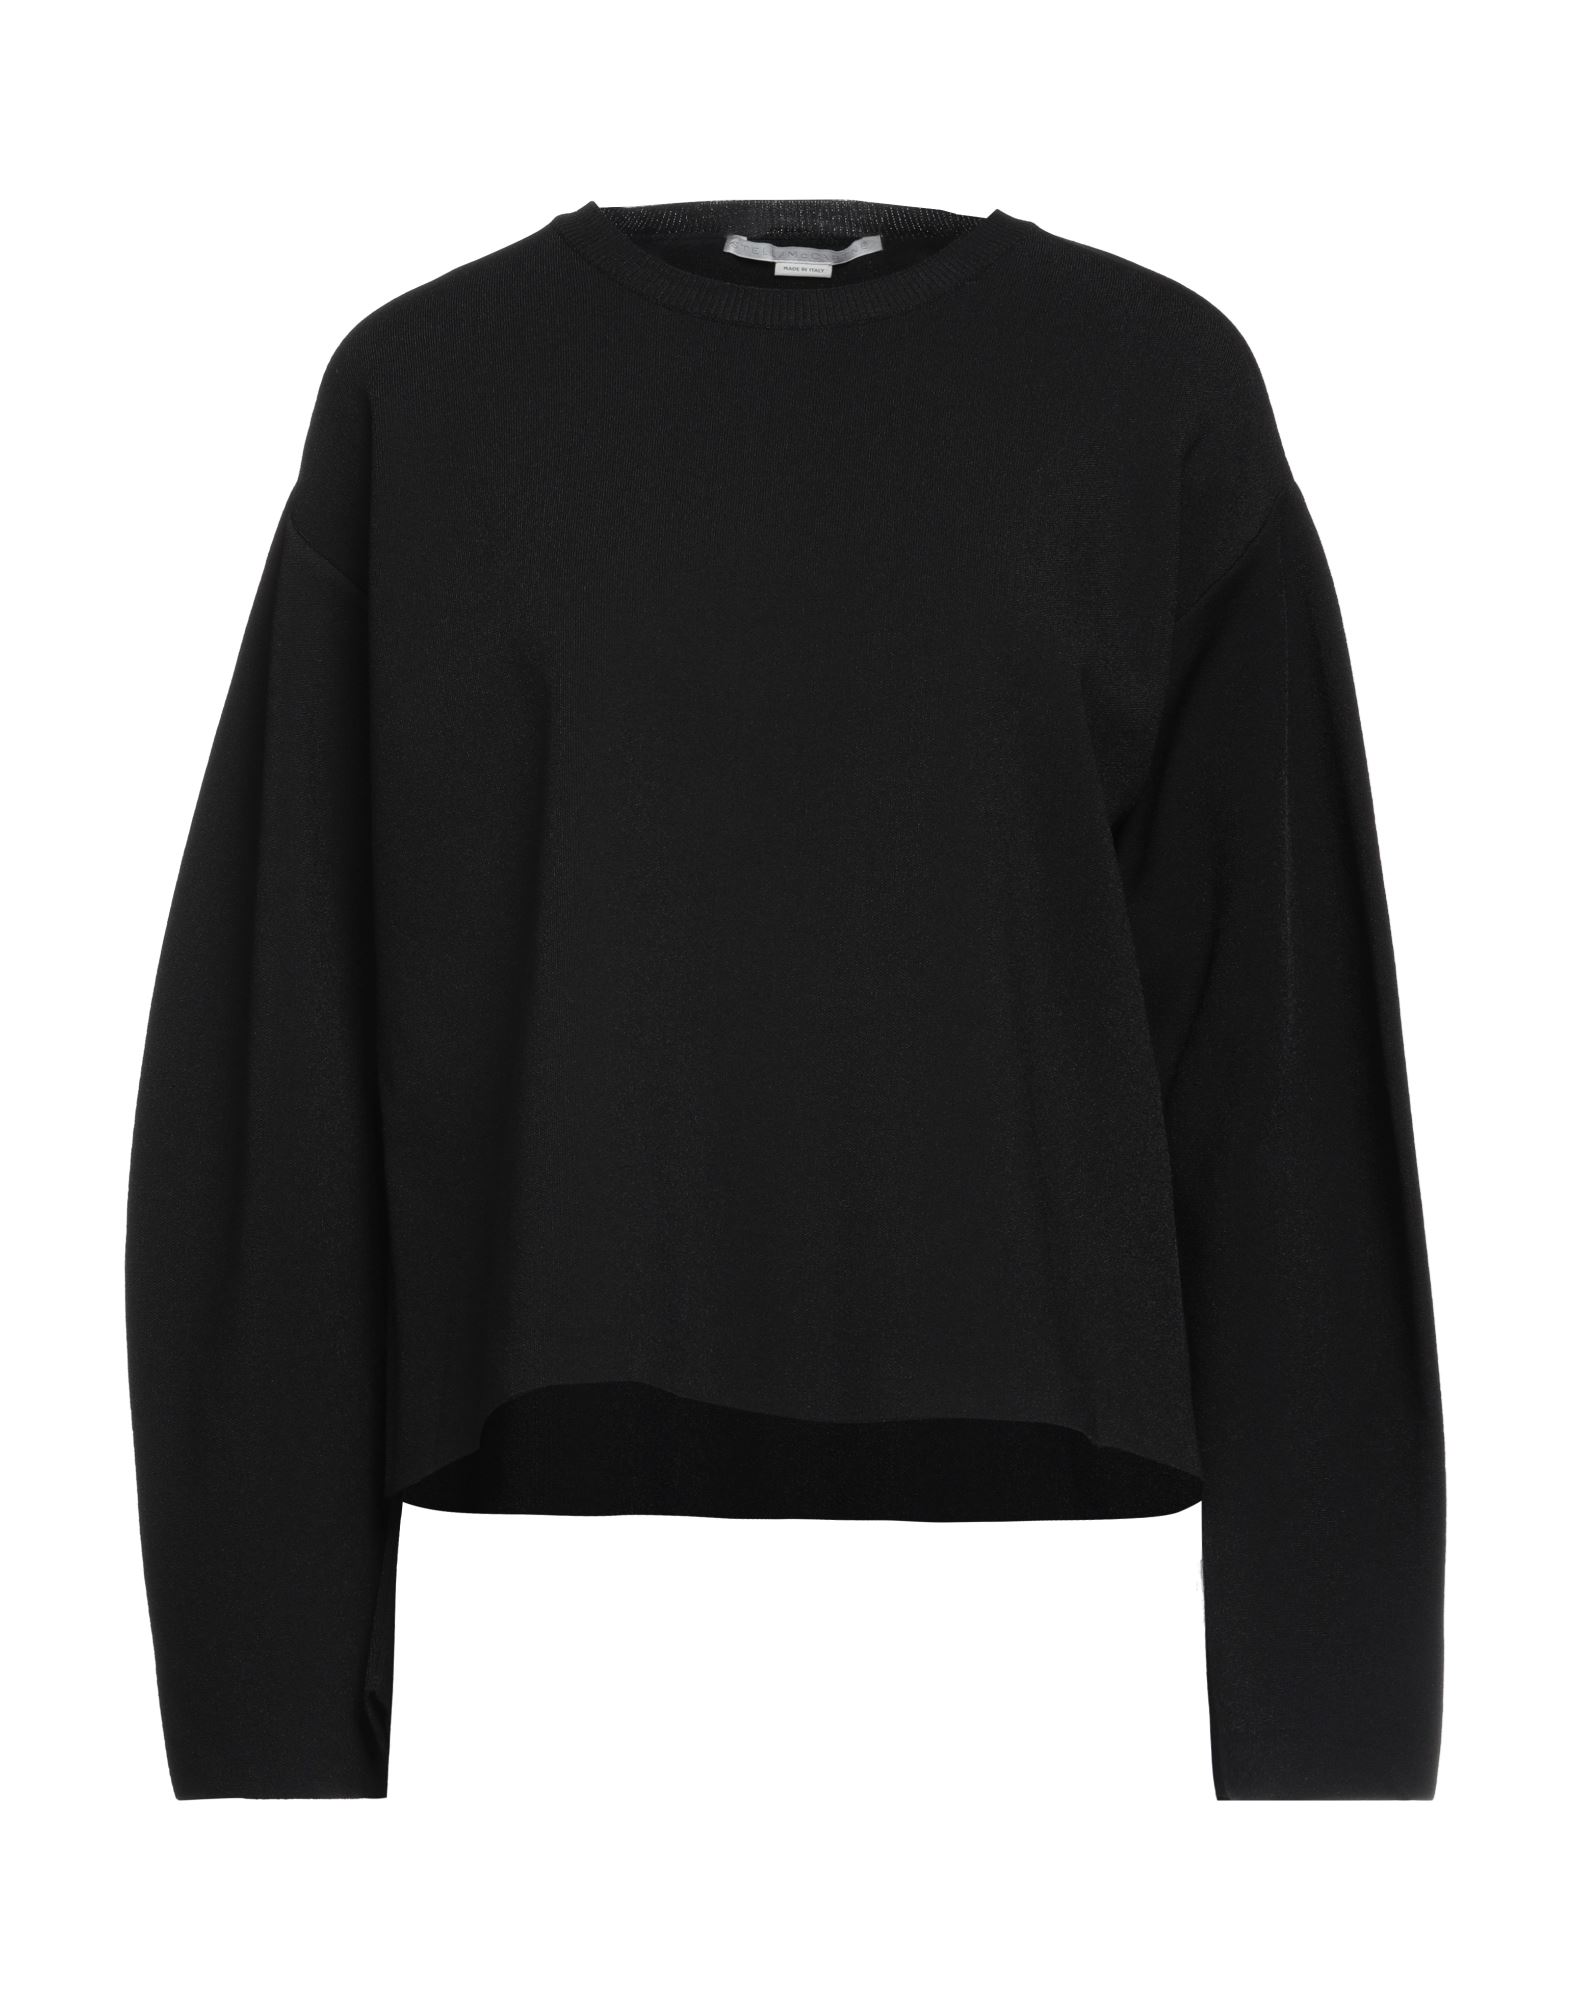 Stella Mccartney Sweatshirts In Black